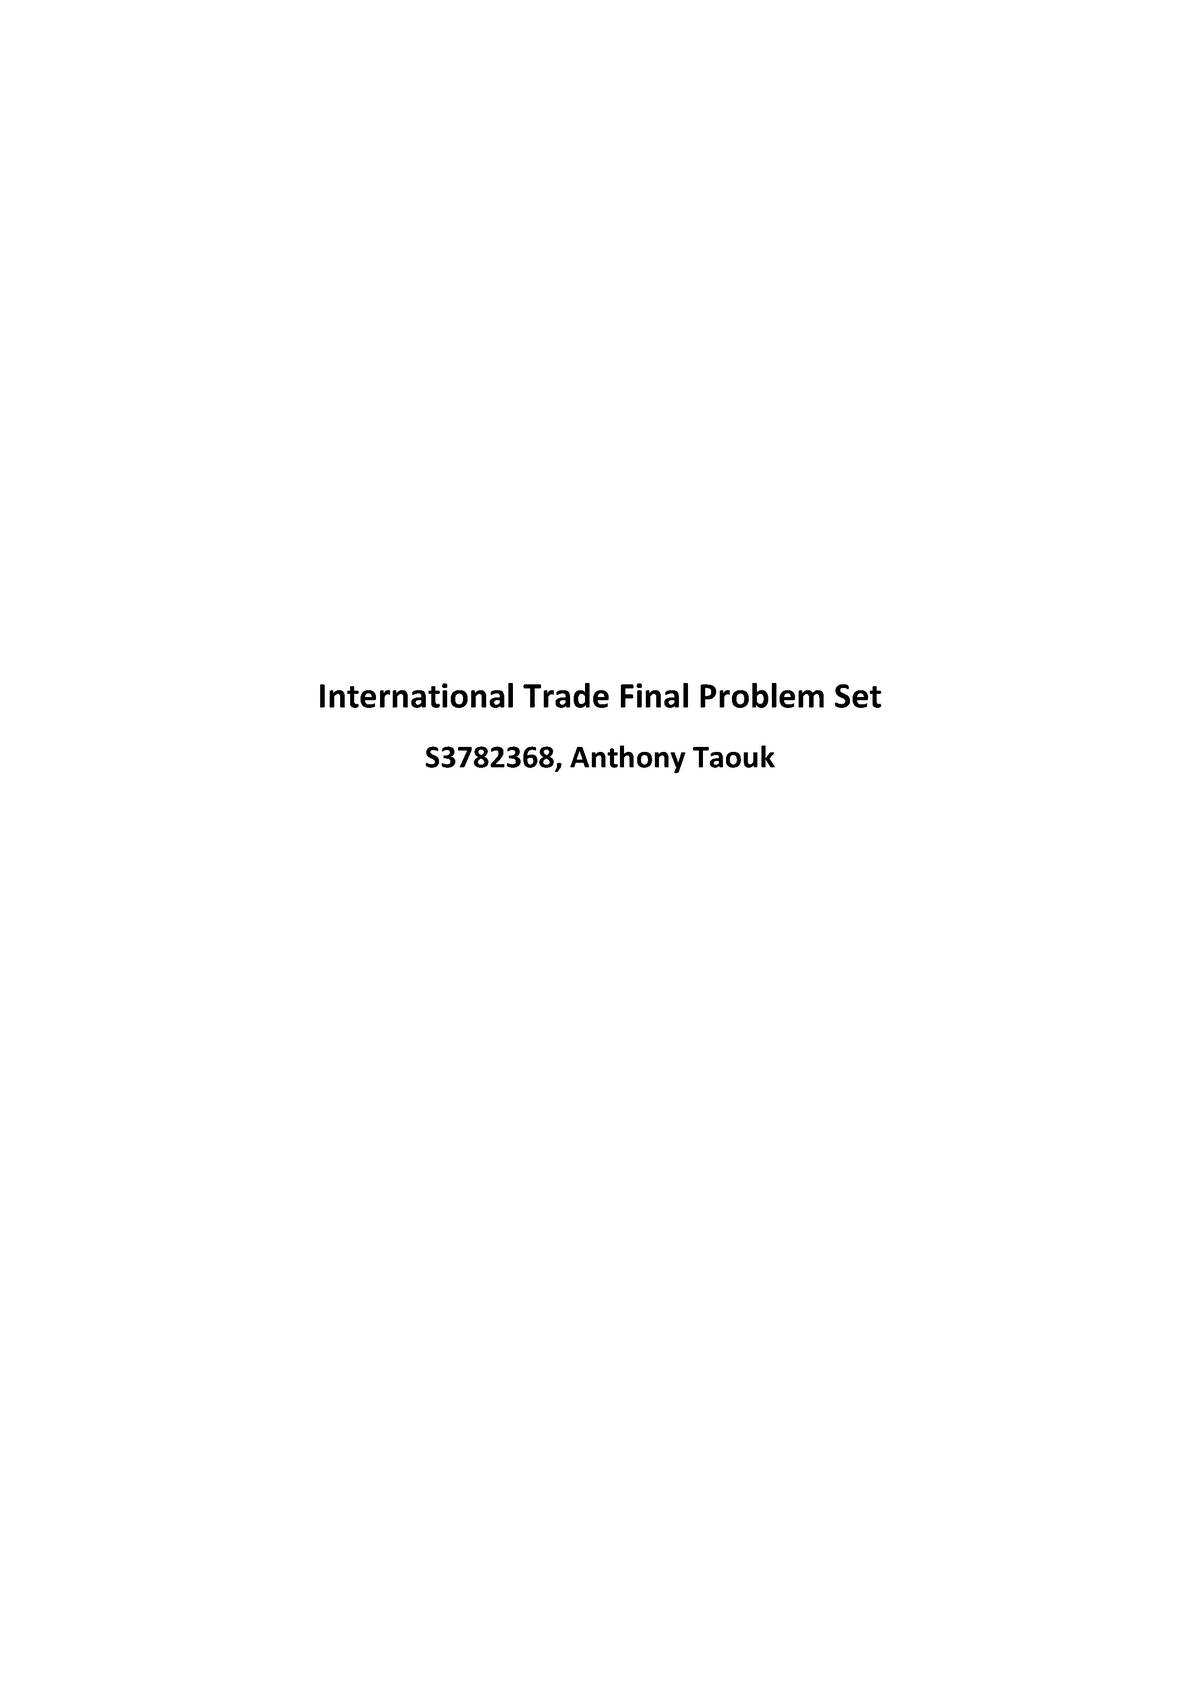 international trade assignment topics